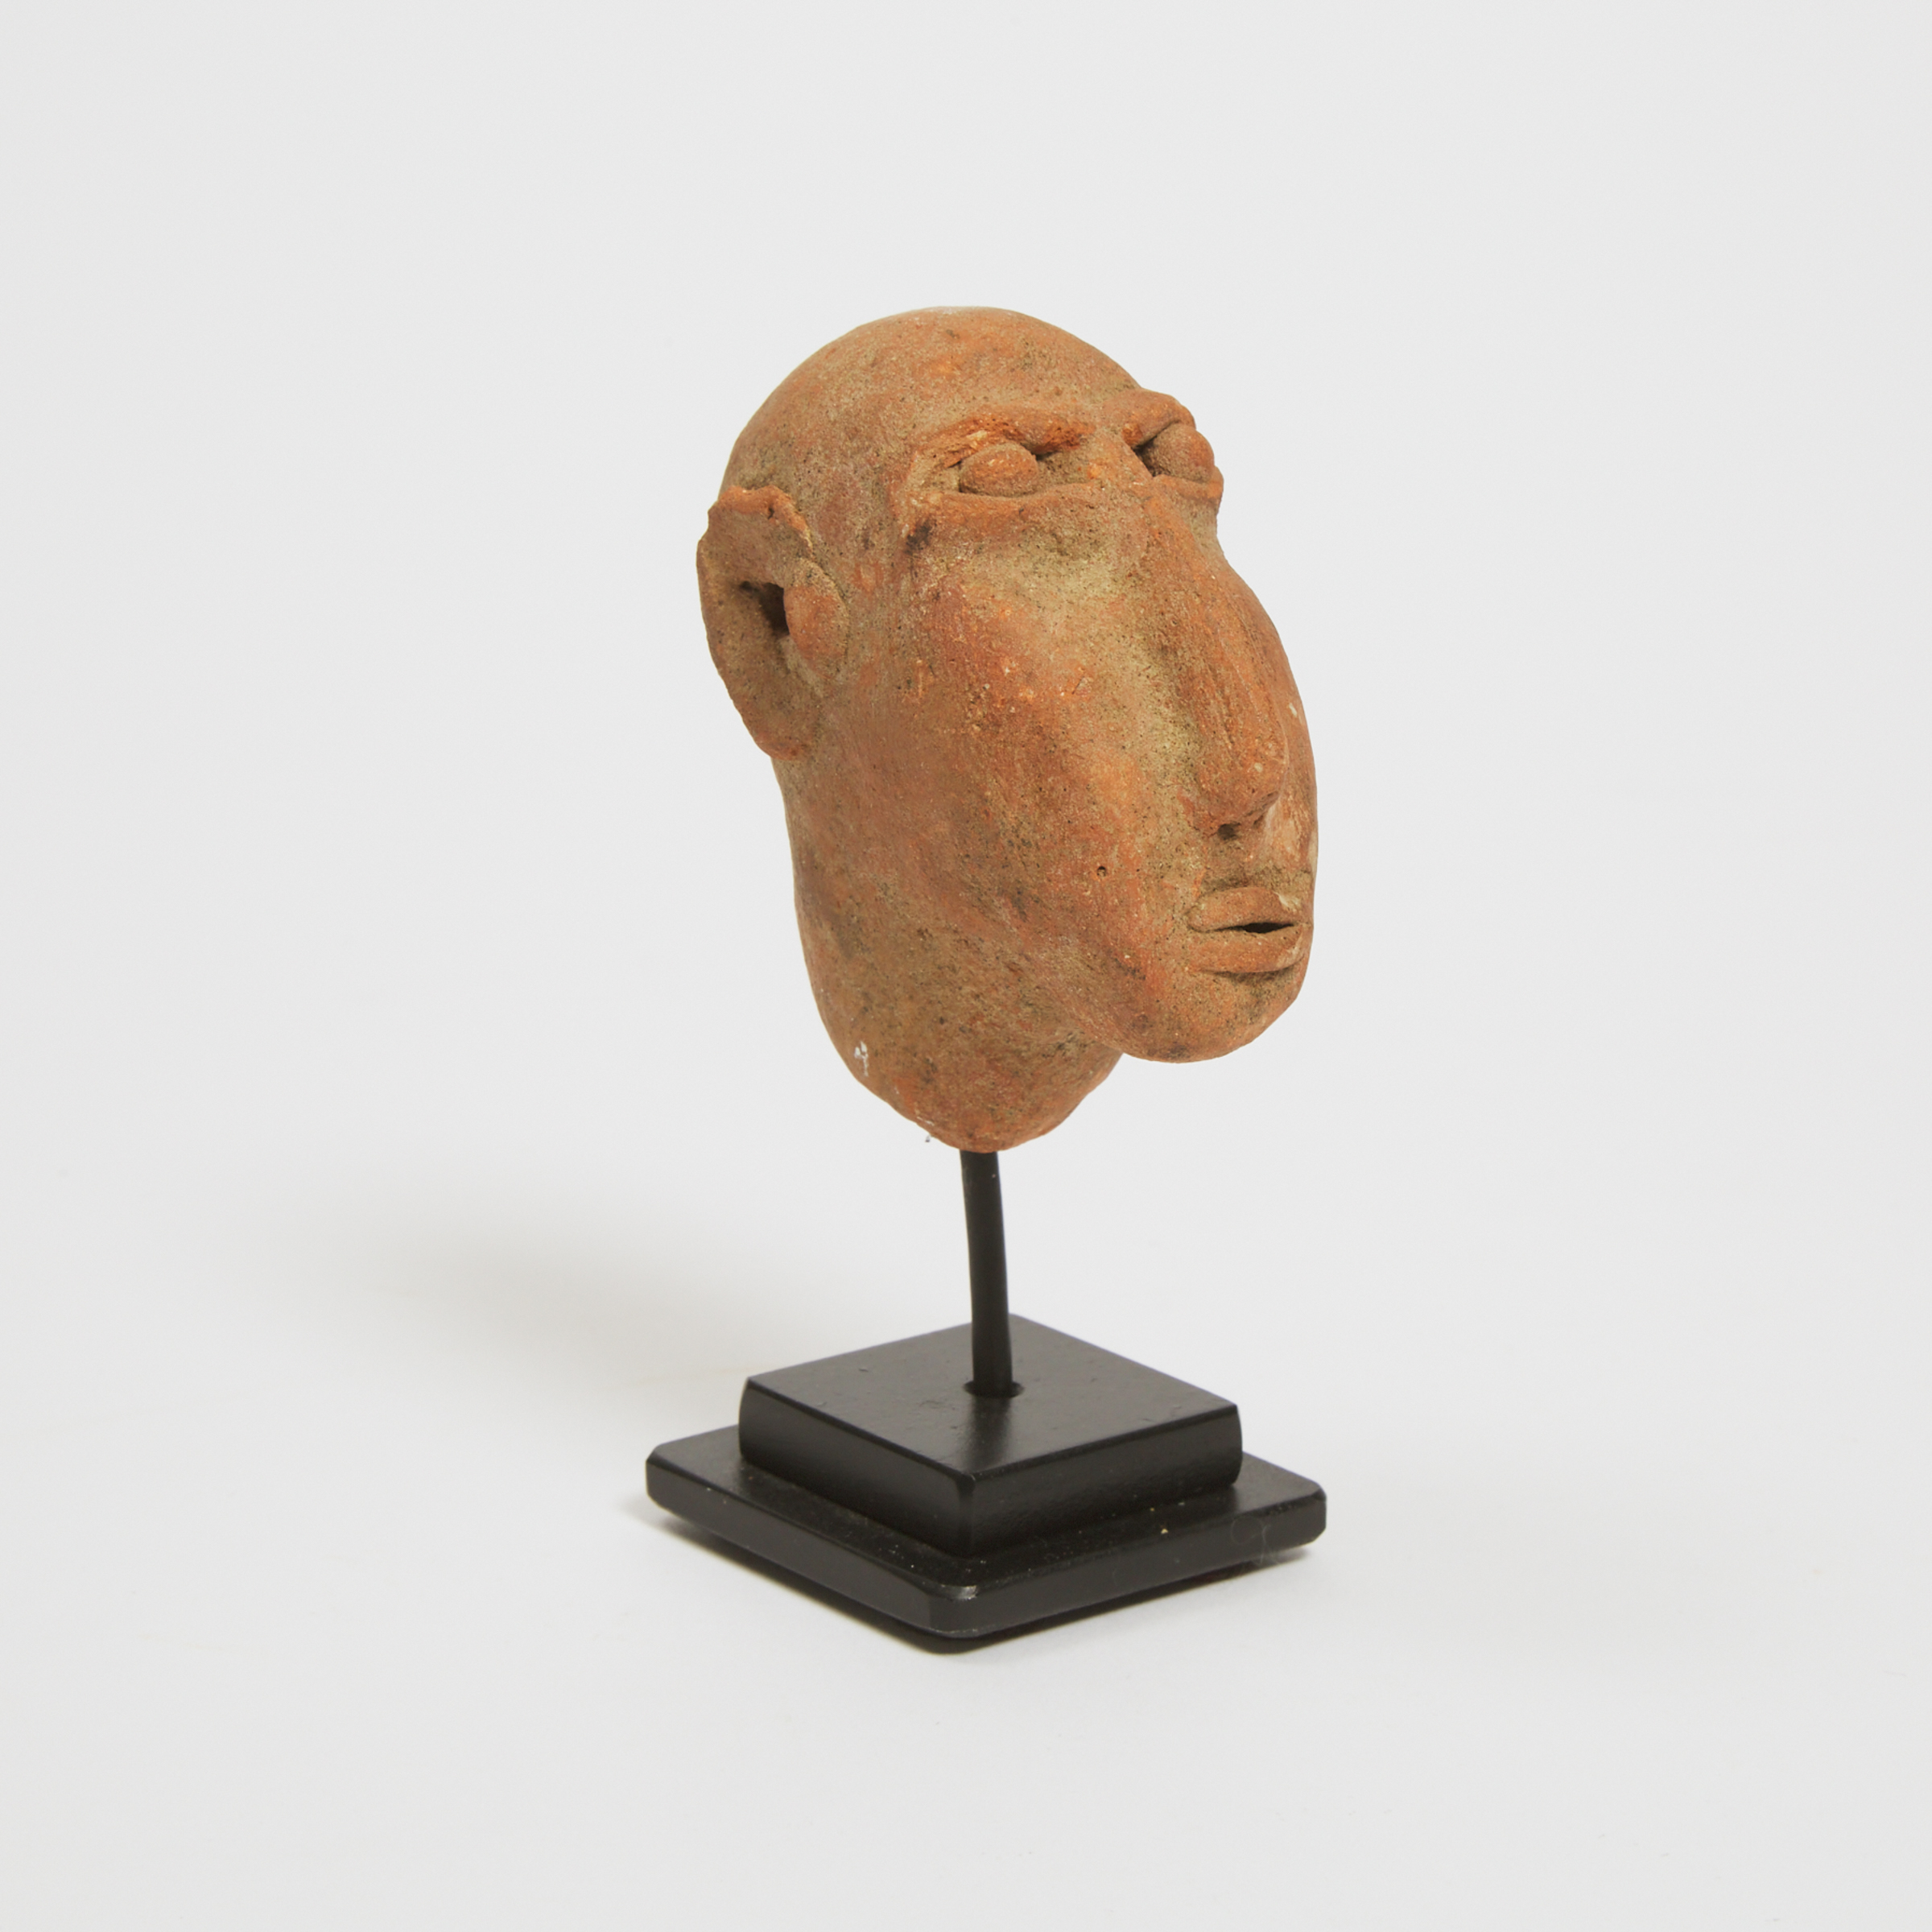 Falasha or Beta Israel Terracotta Head, Ethiopia, 400-700 AD